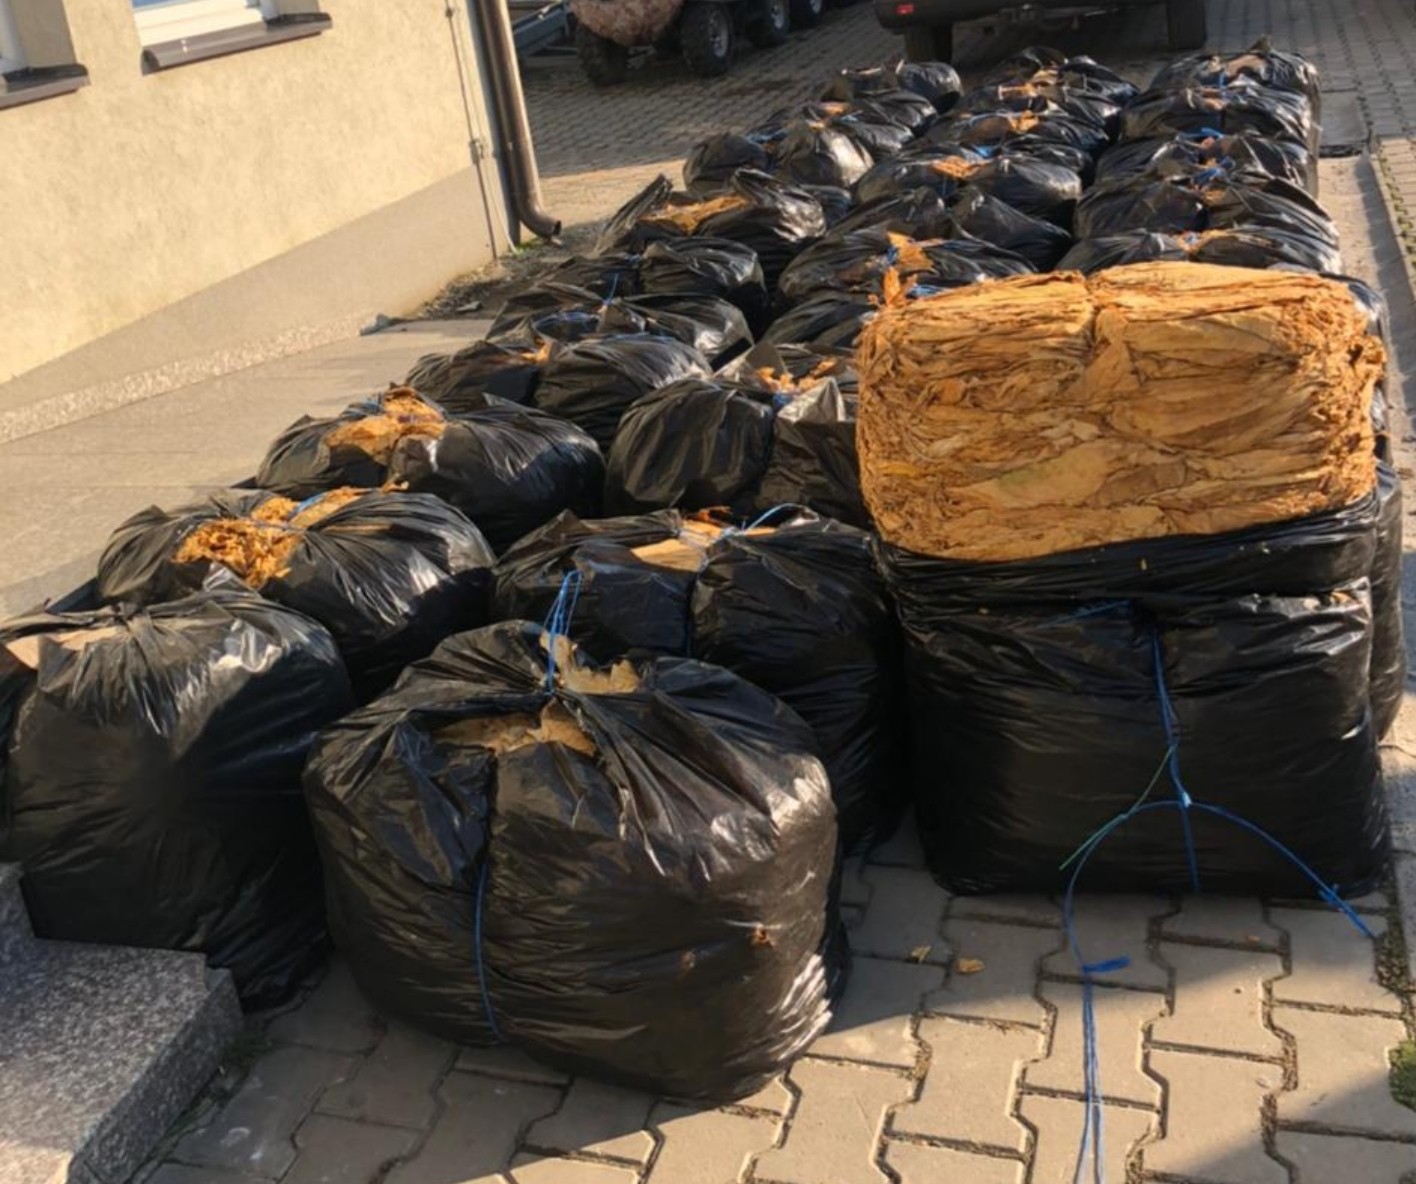 Policia kufitare e Kosovës sekuestron rreth 1000 kg duhan